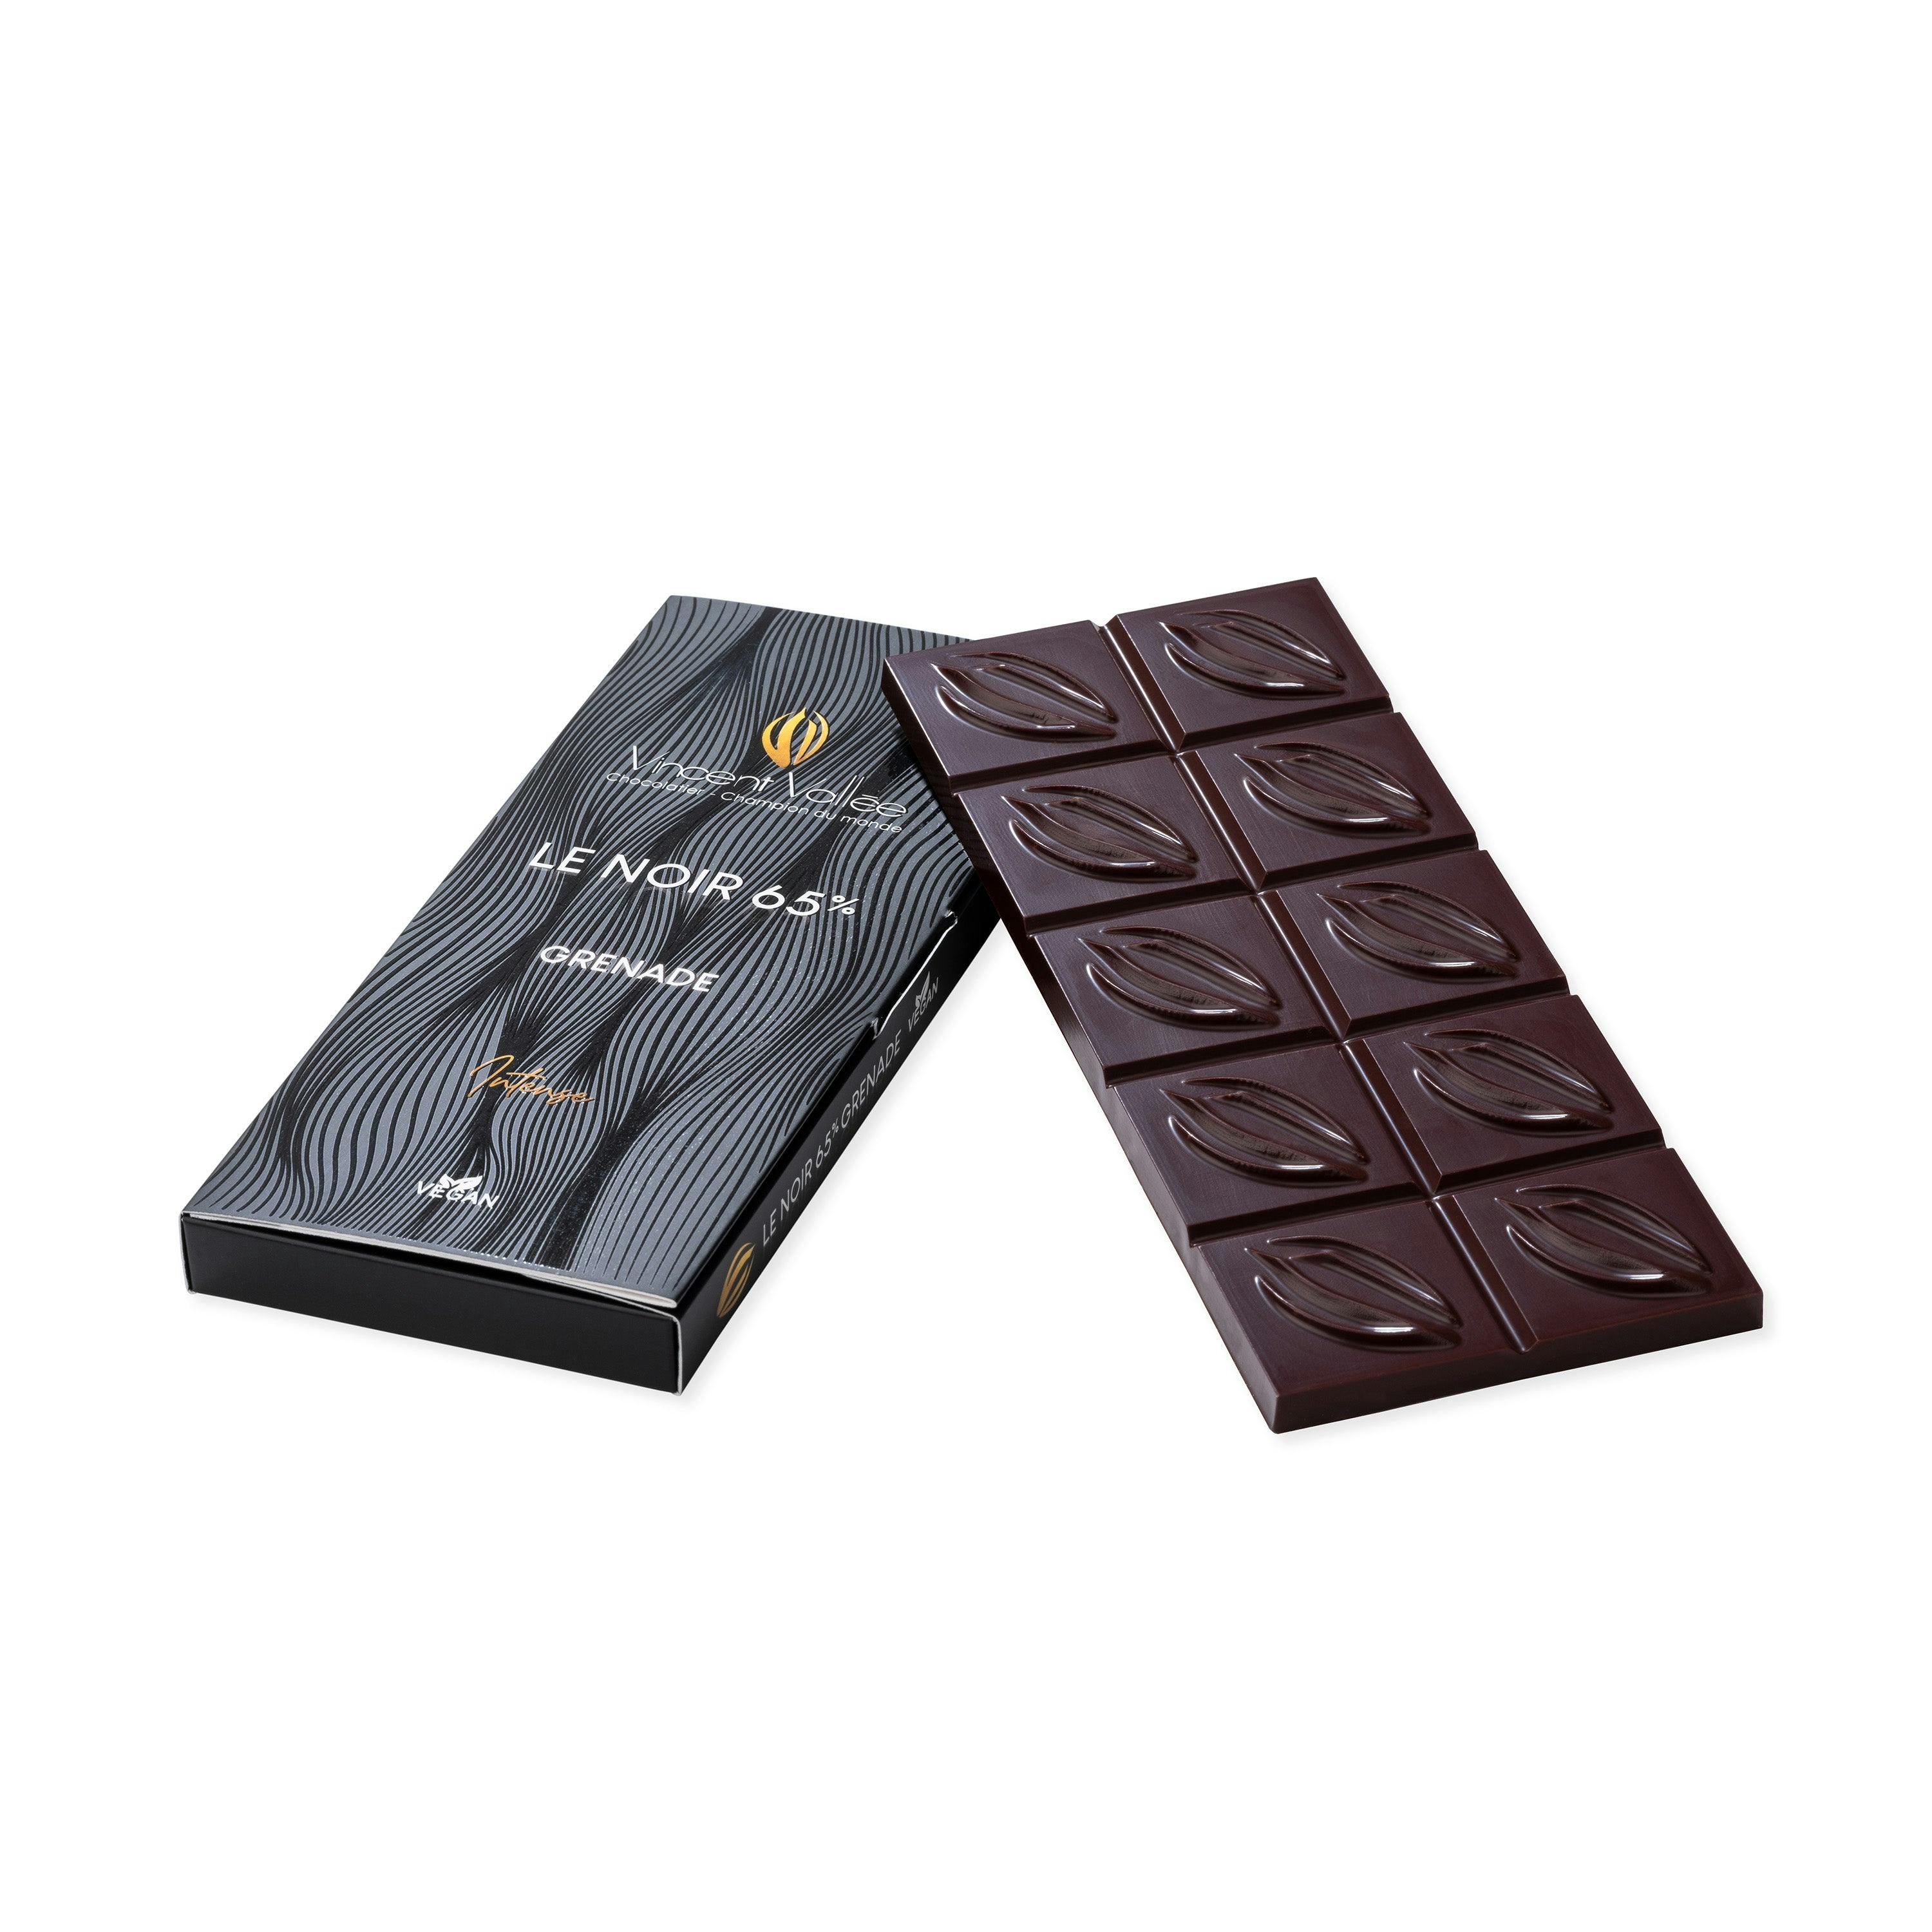 Grenade 65% Vegan - Vincent Vallée chocolatier champion du monde